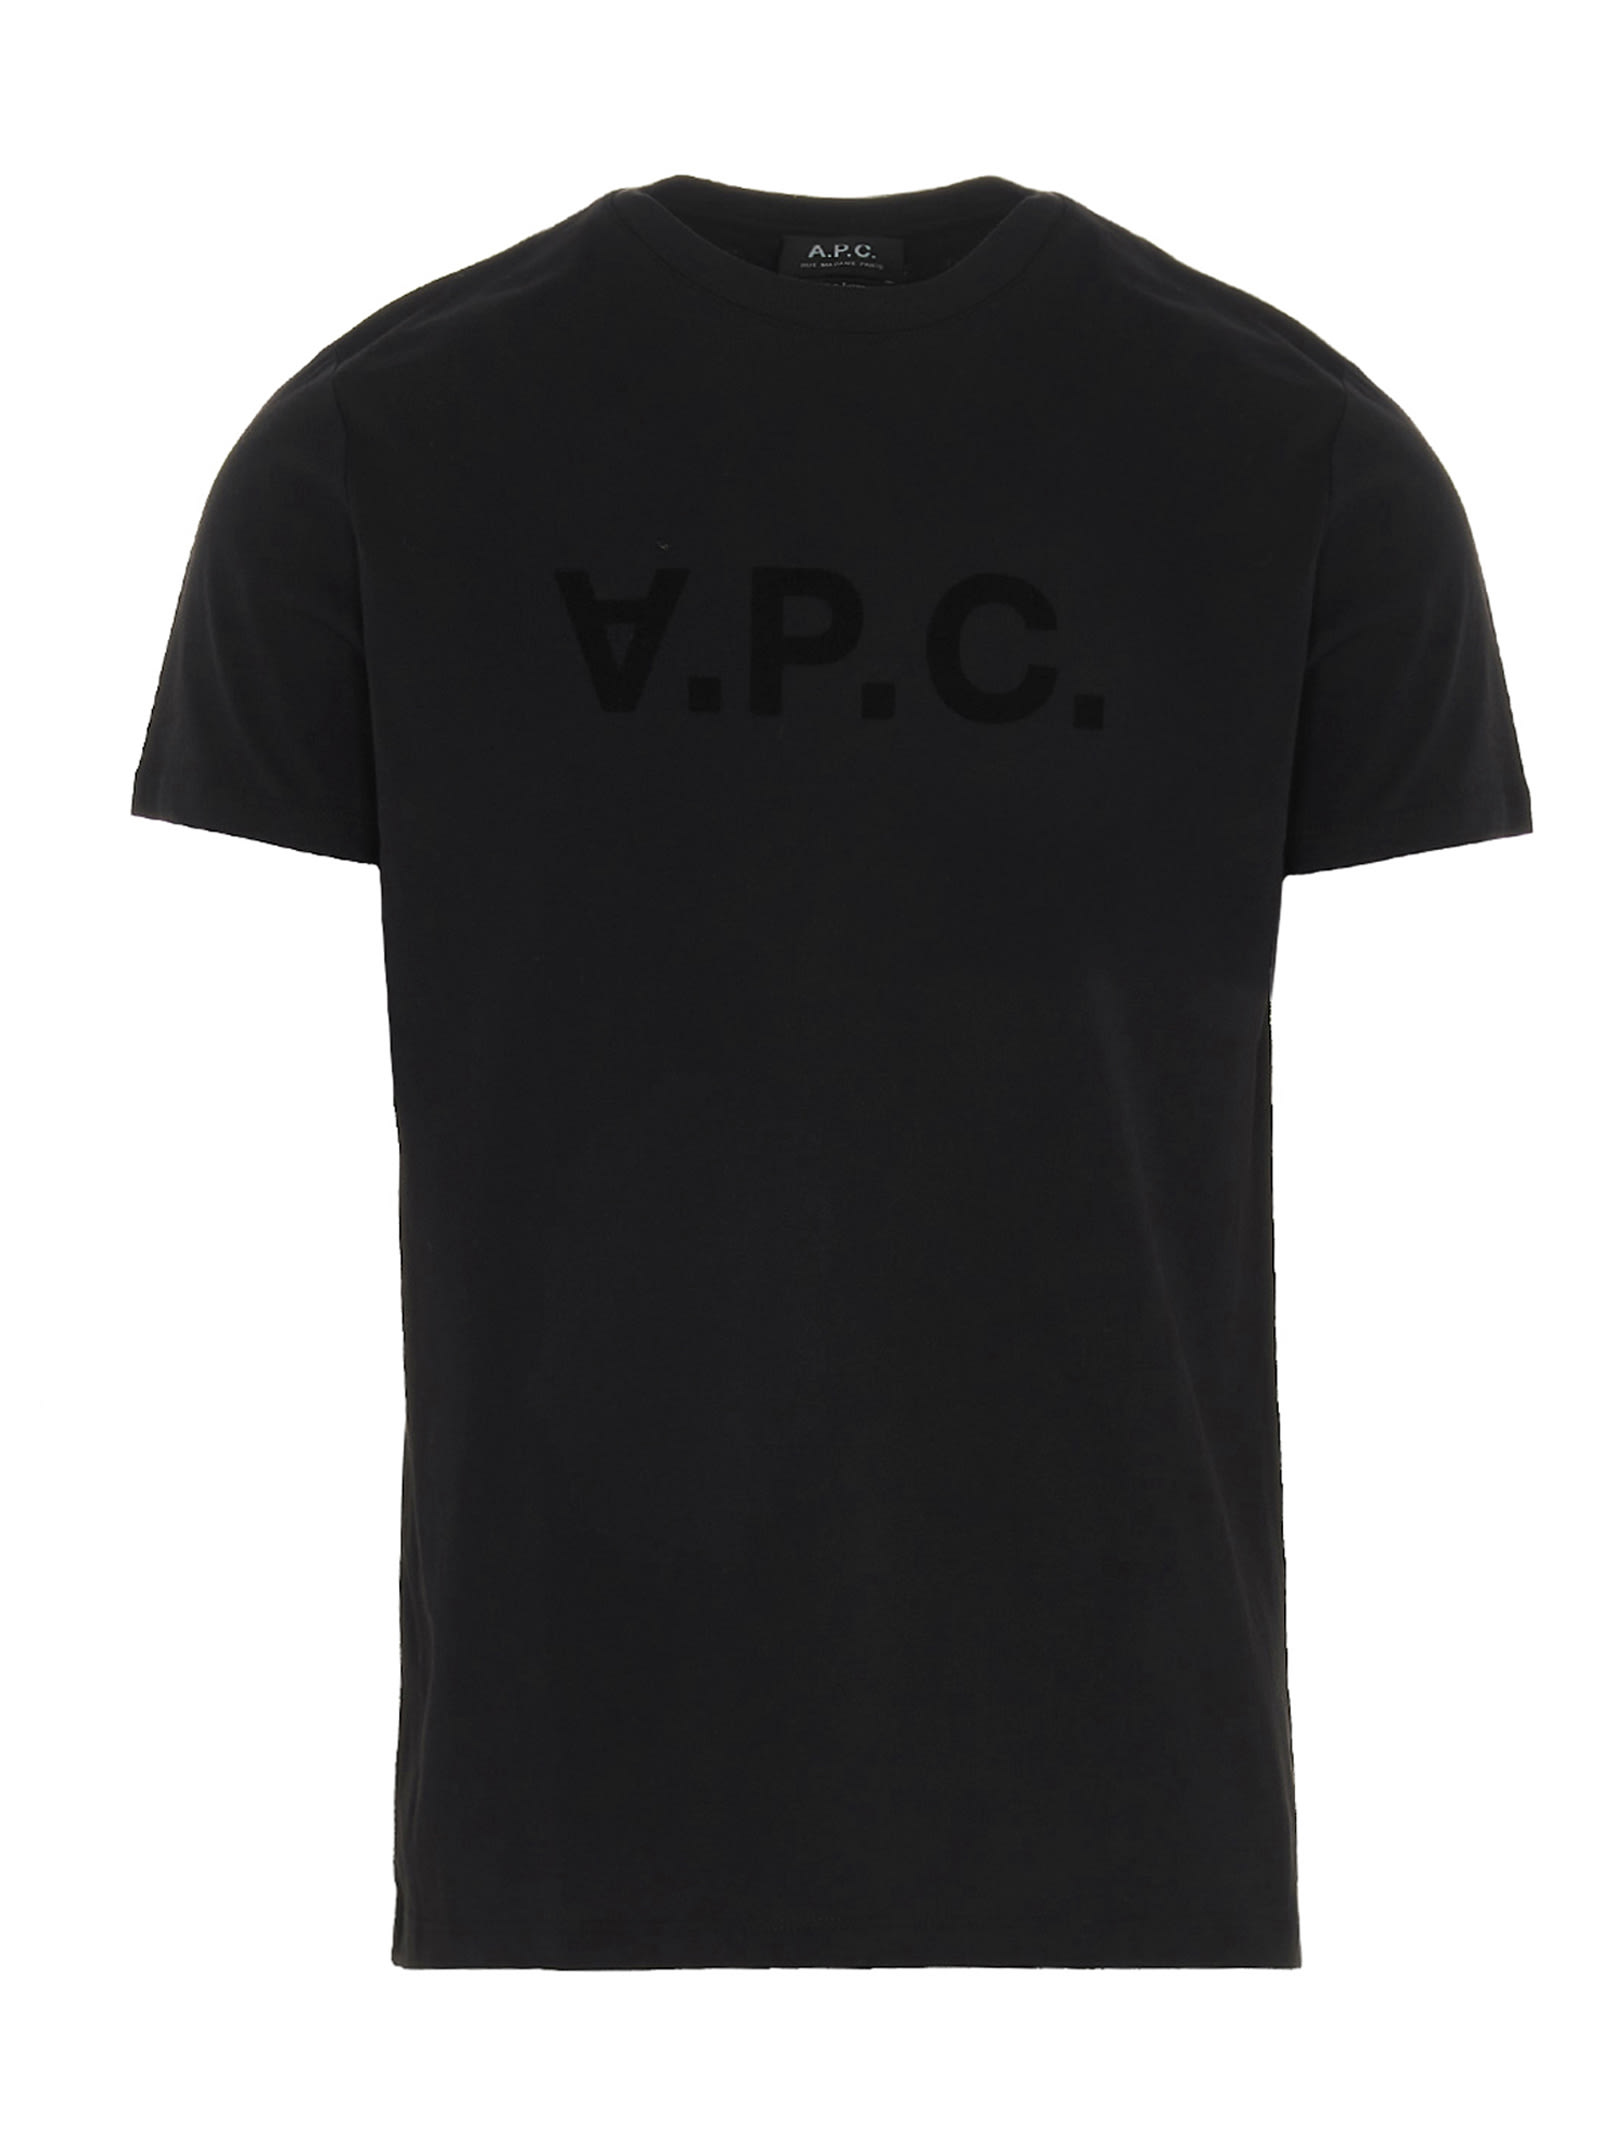 A.P.C. apc T-shirt